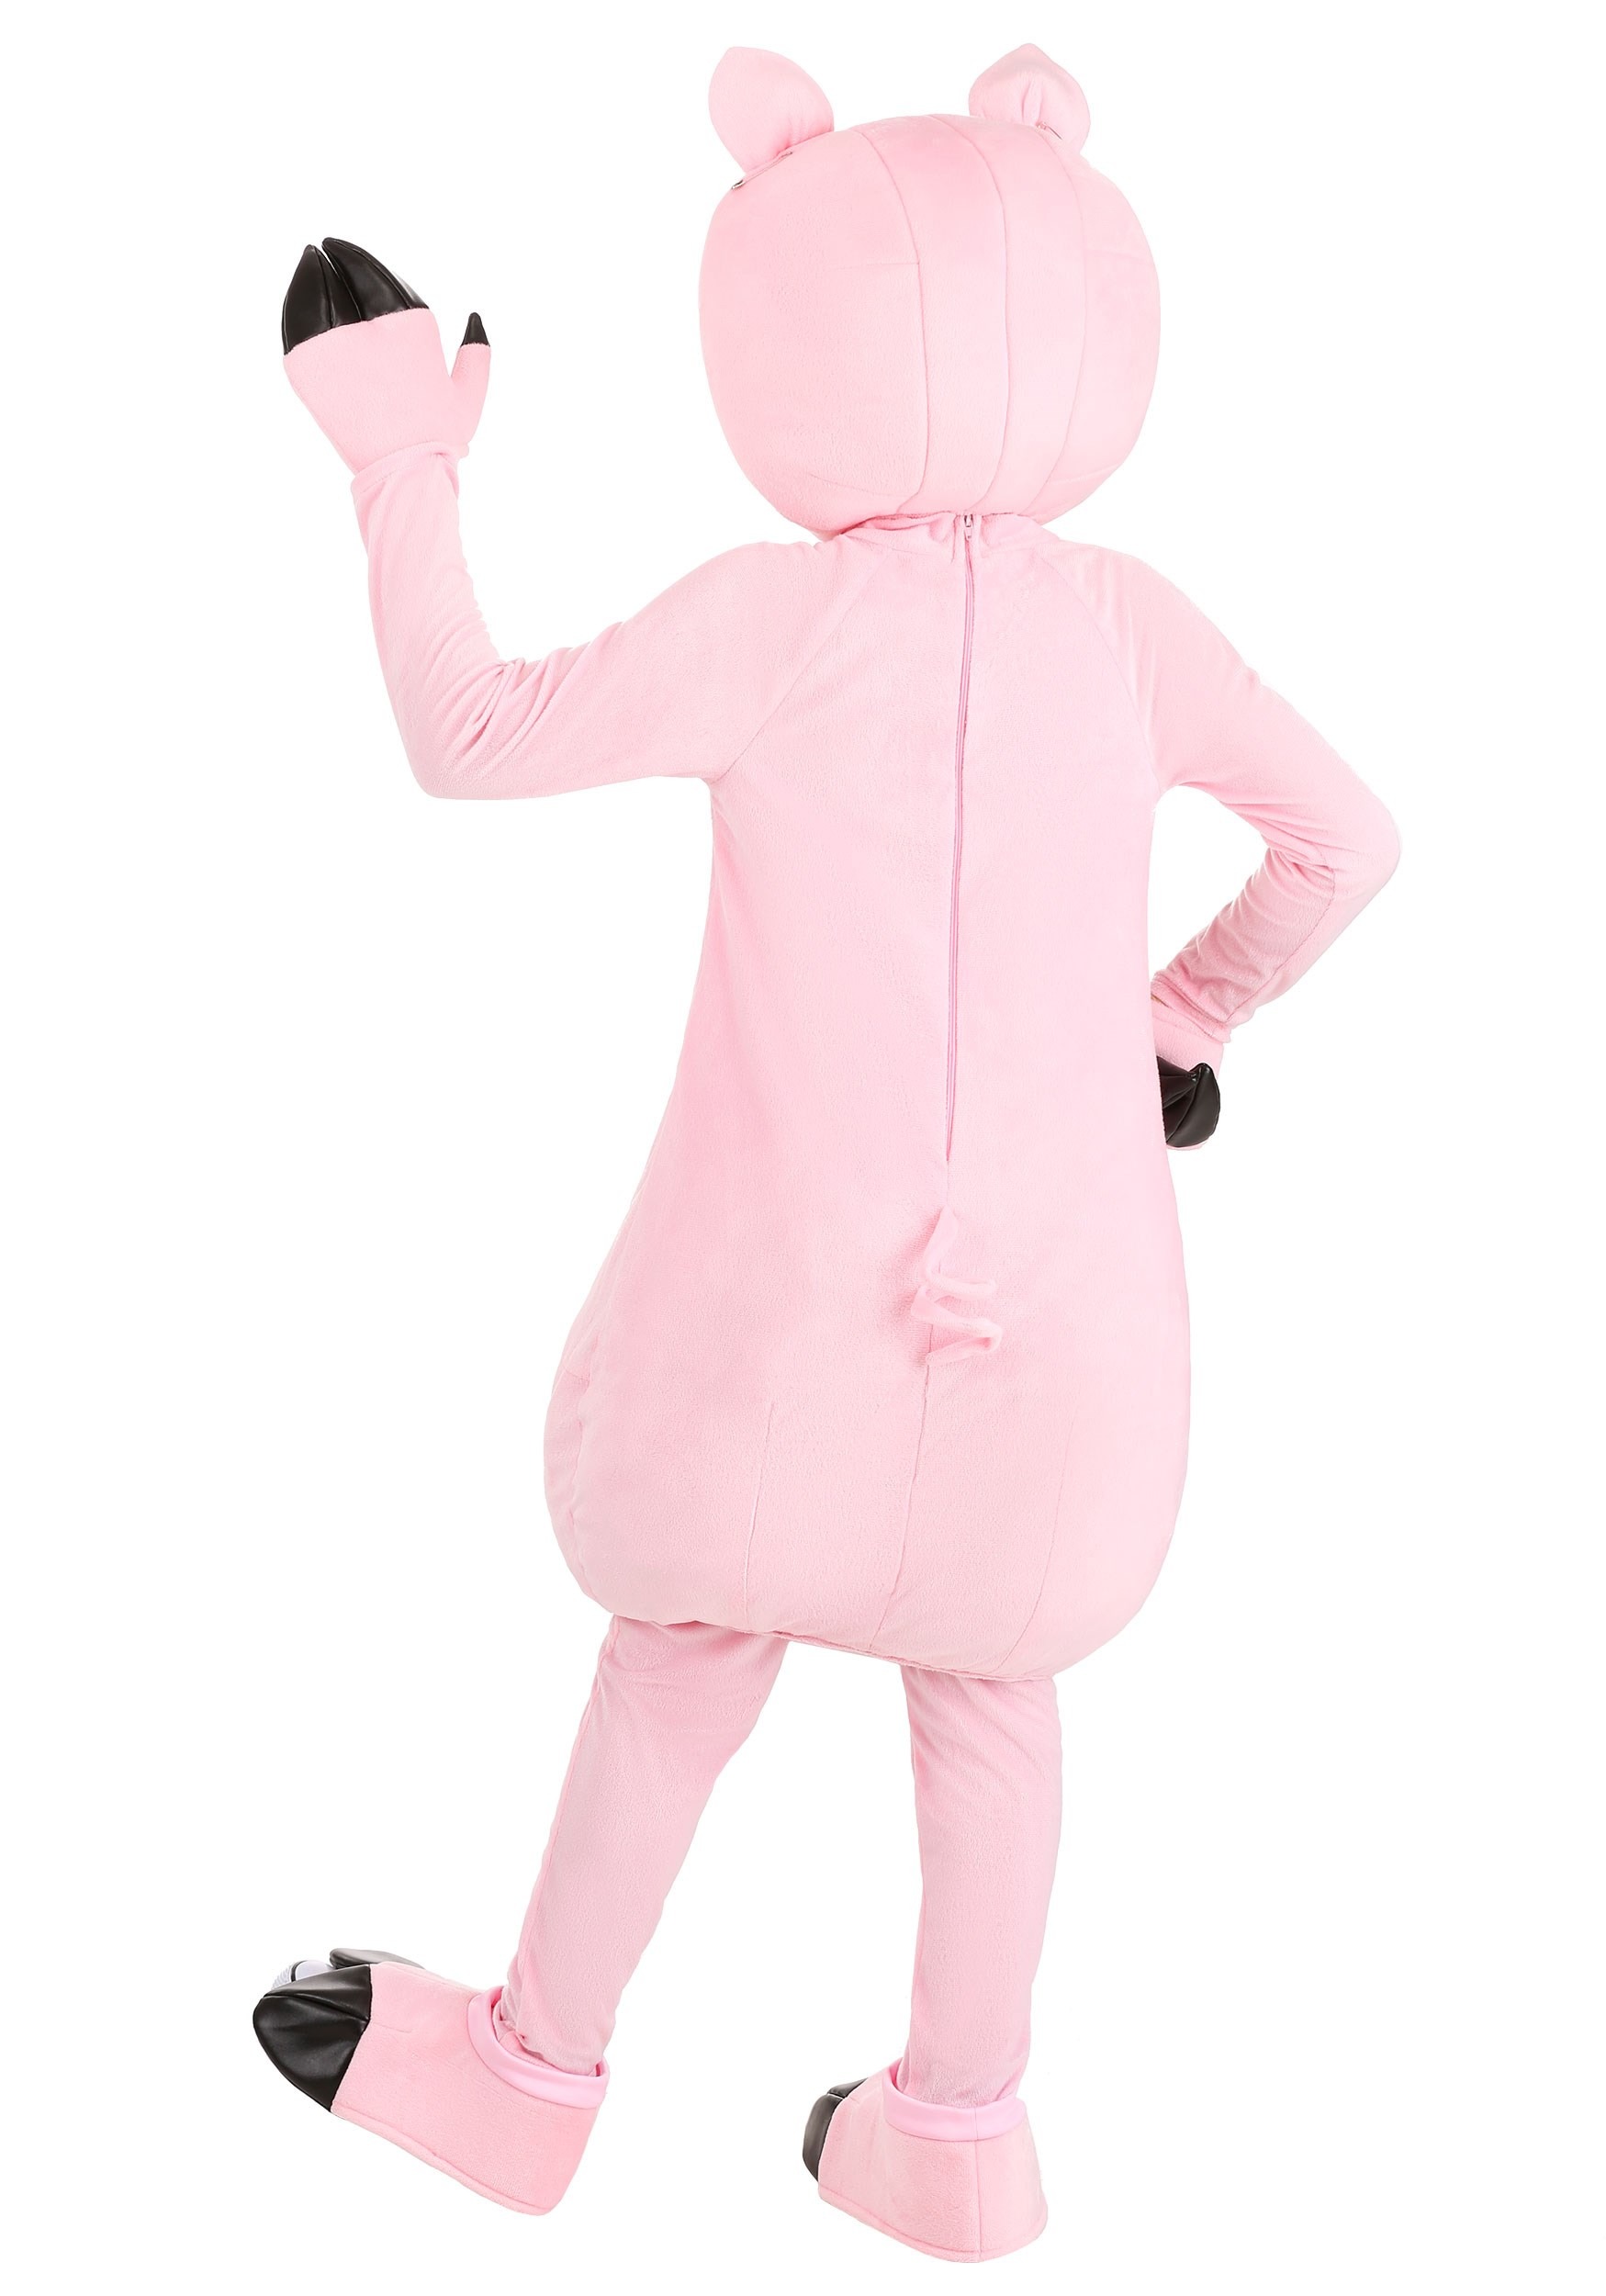 Pink Pig Kid's Costume